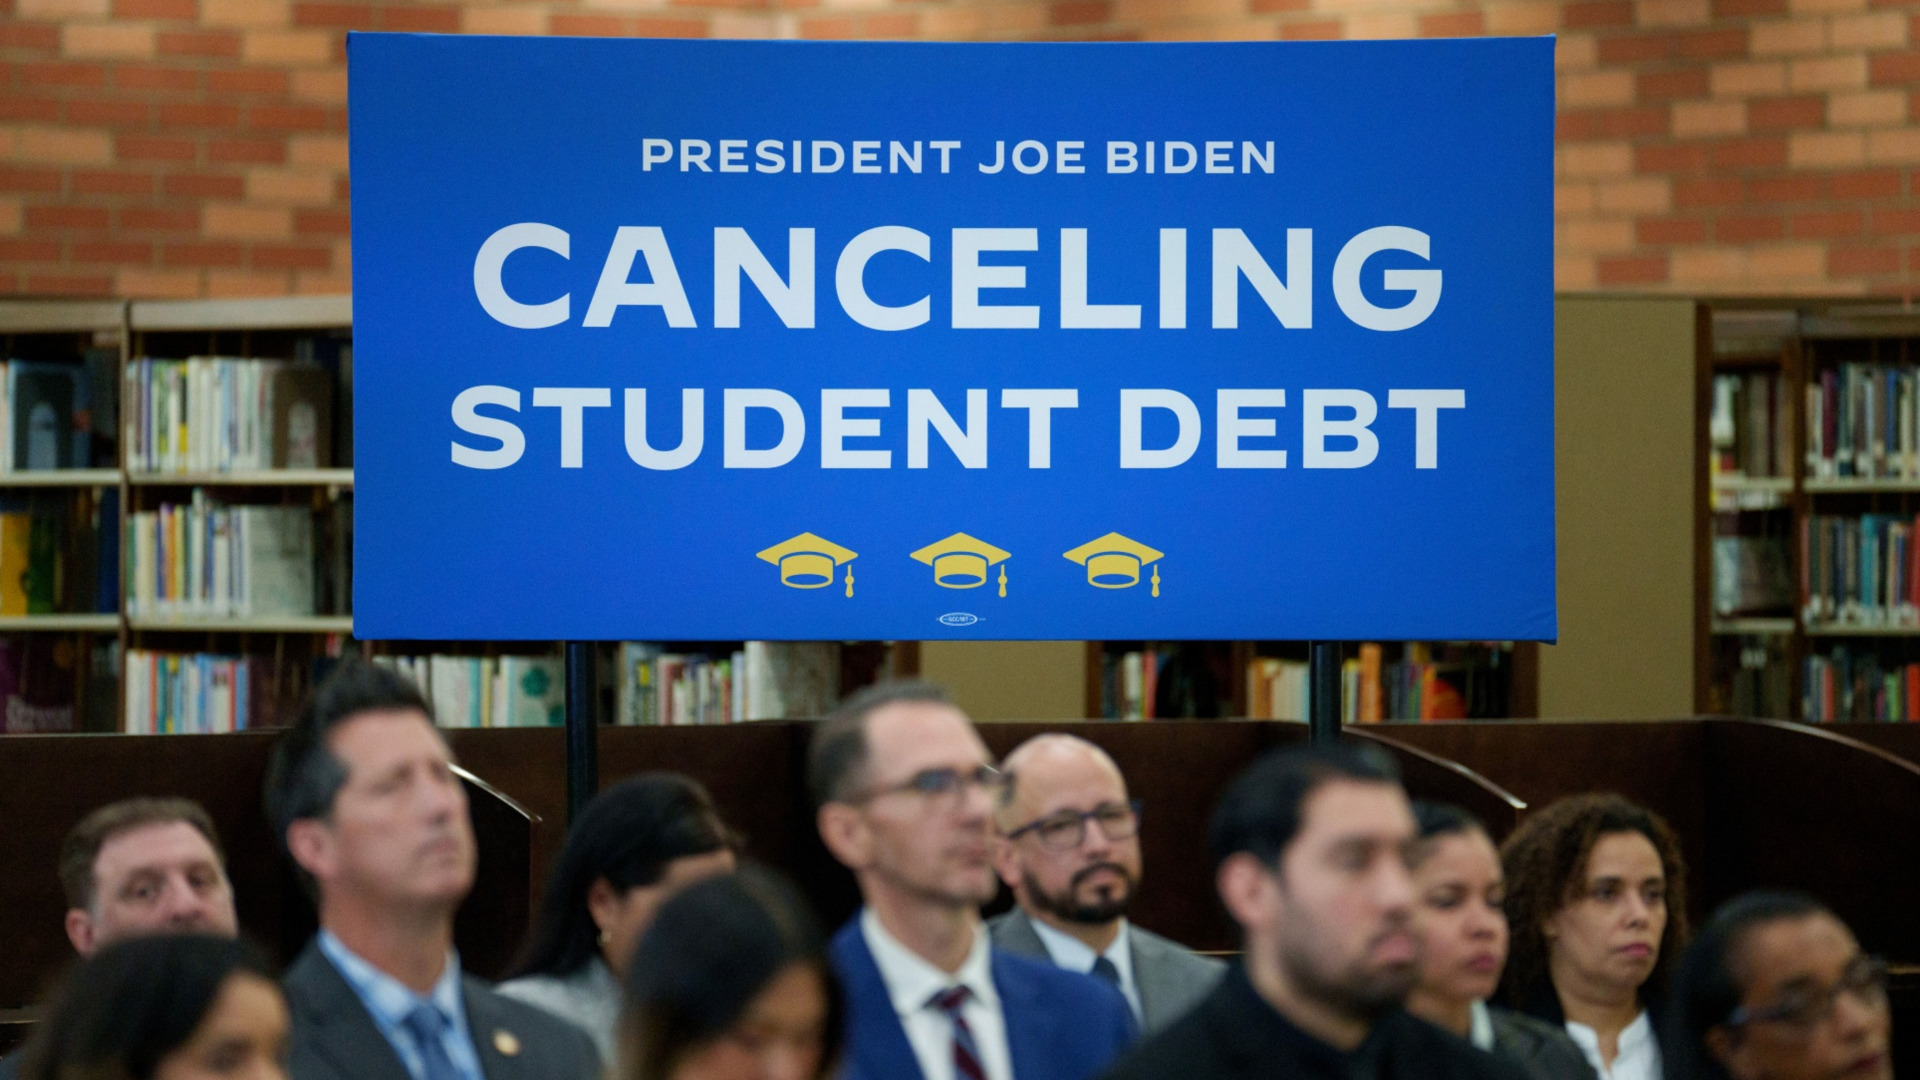  Penghapusan Utang Mahasiswa, 'Bansos' ala Joe Biden untuk Menangkan Pemilu AS 2024